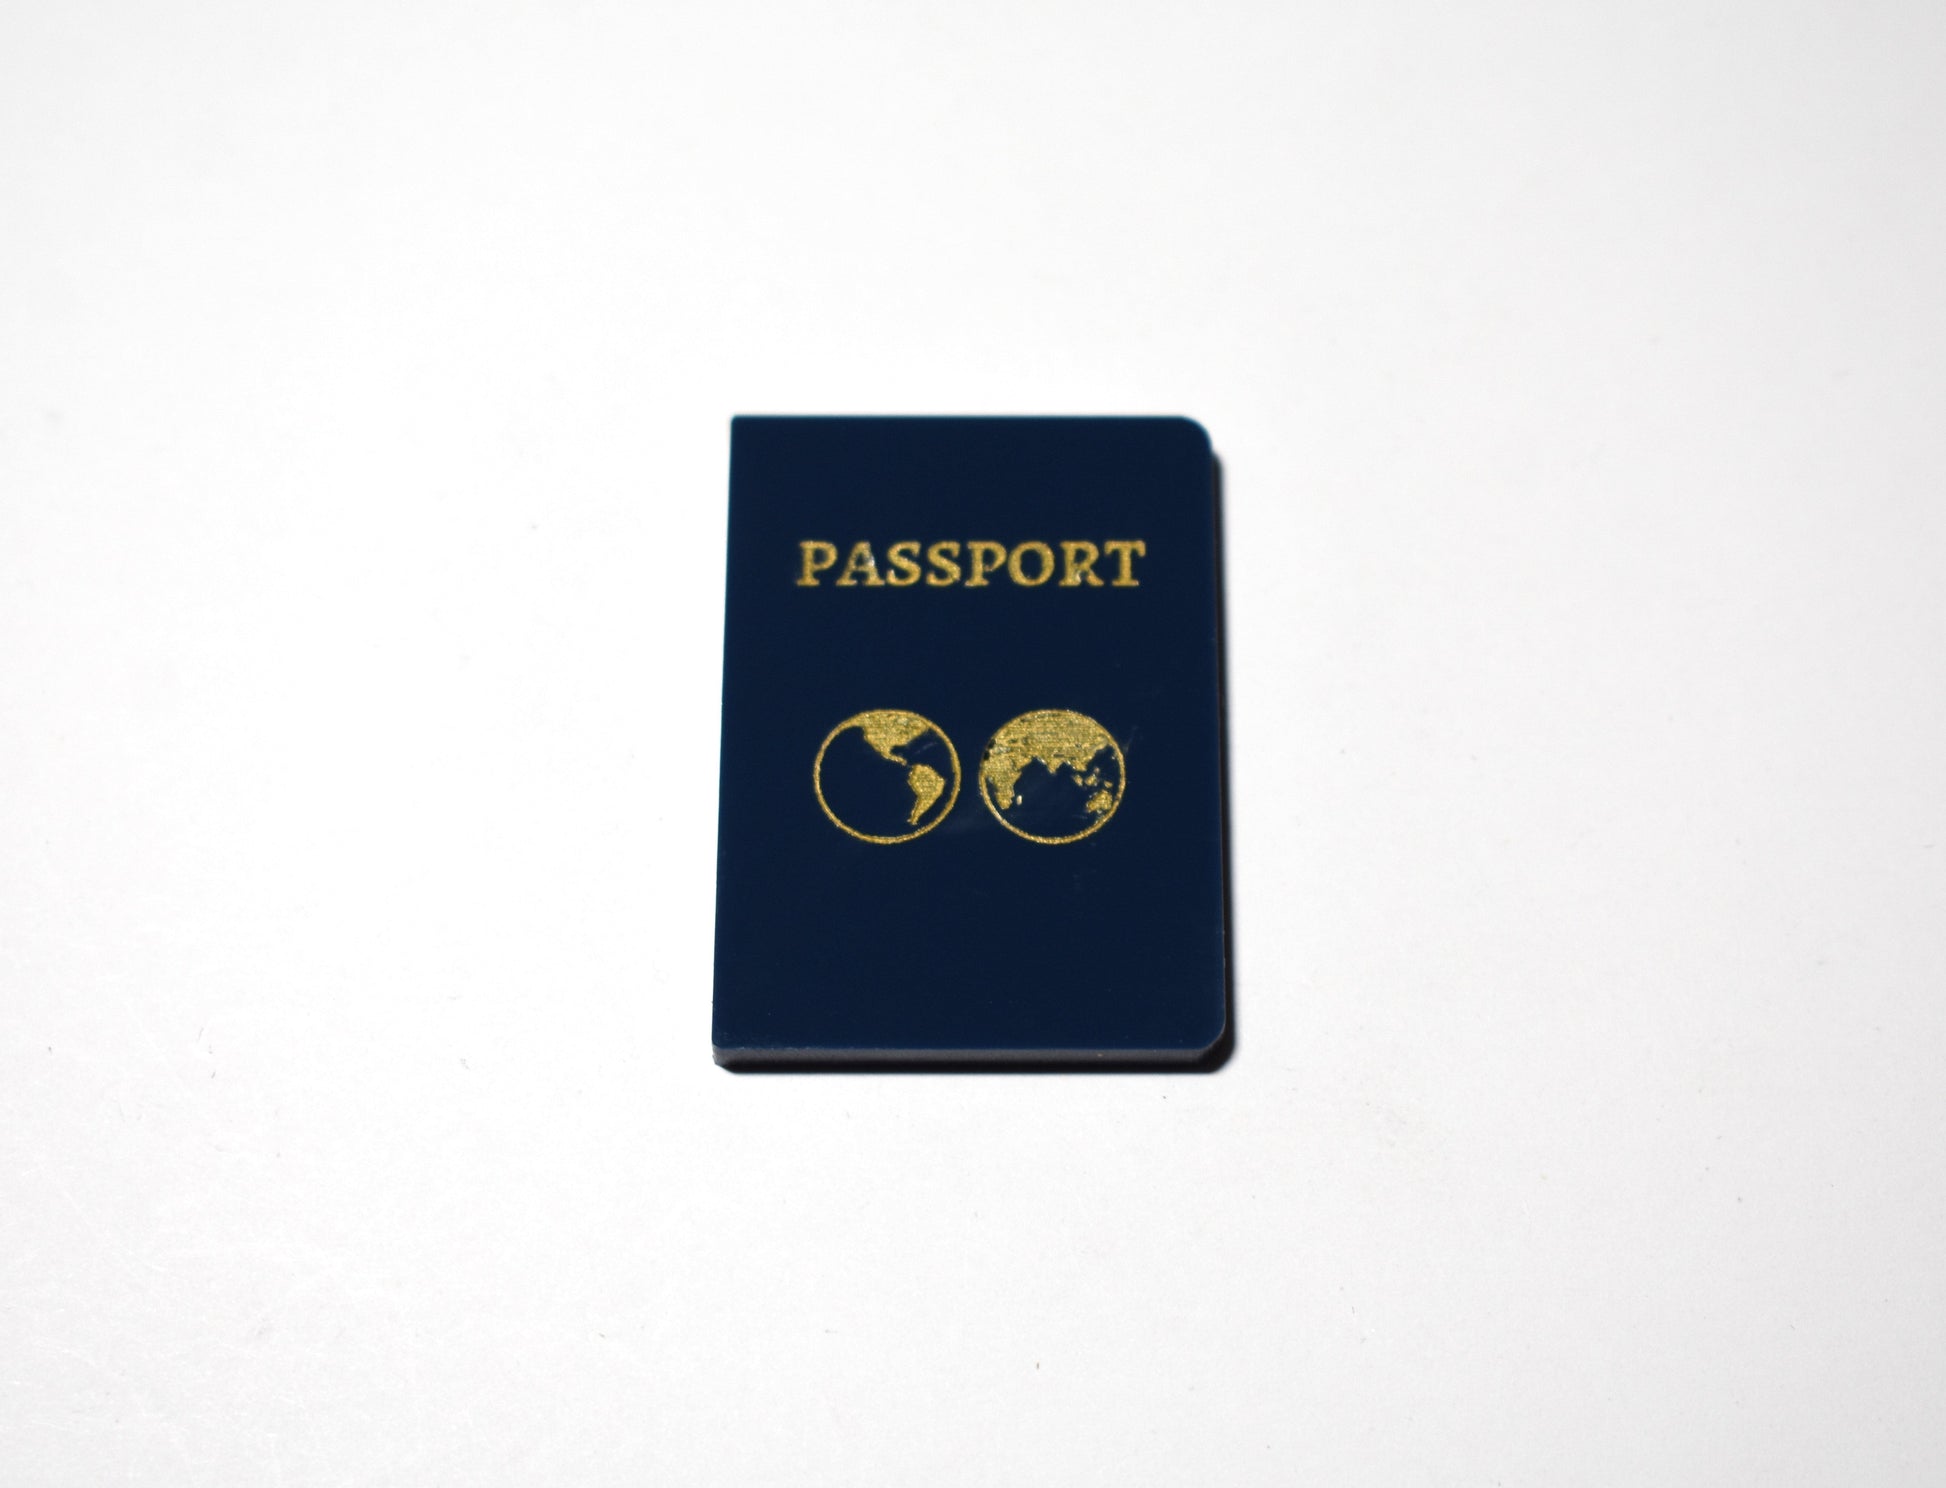 Passport - Creative Designs By Kari